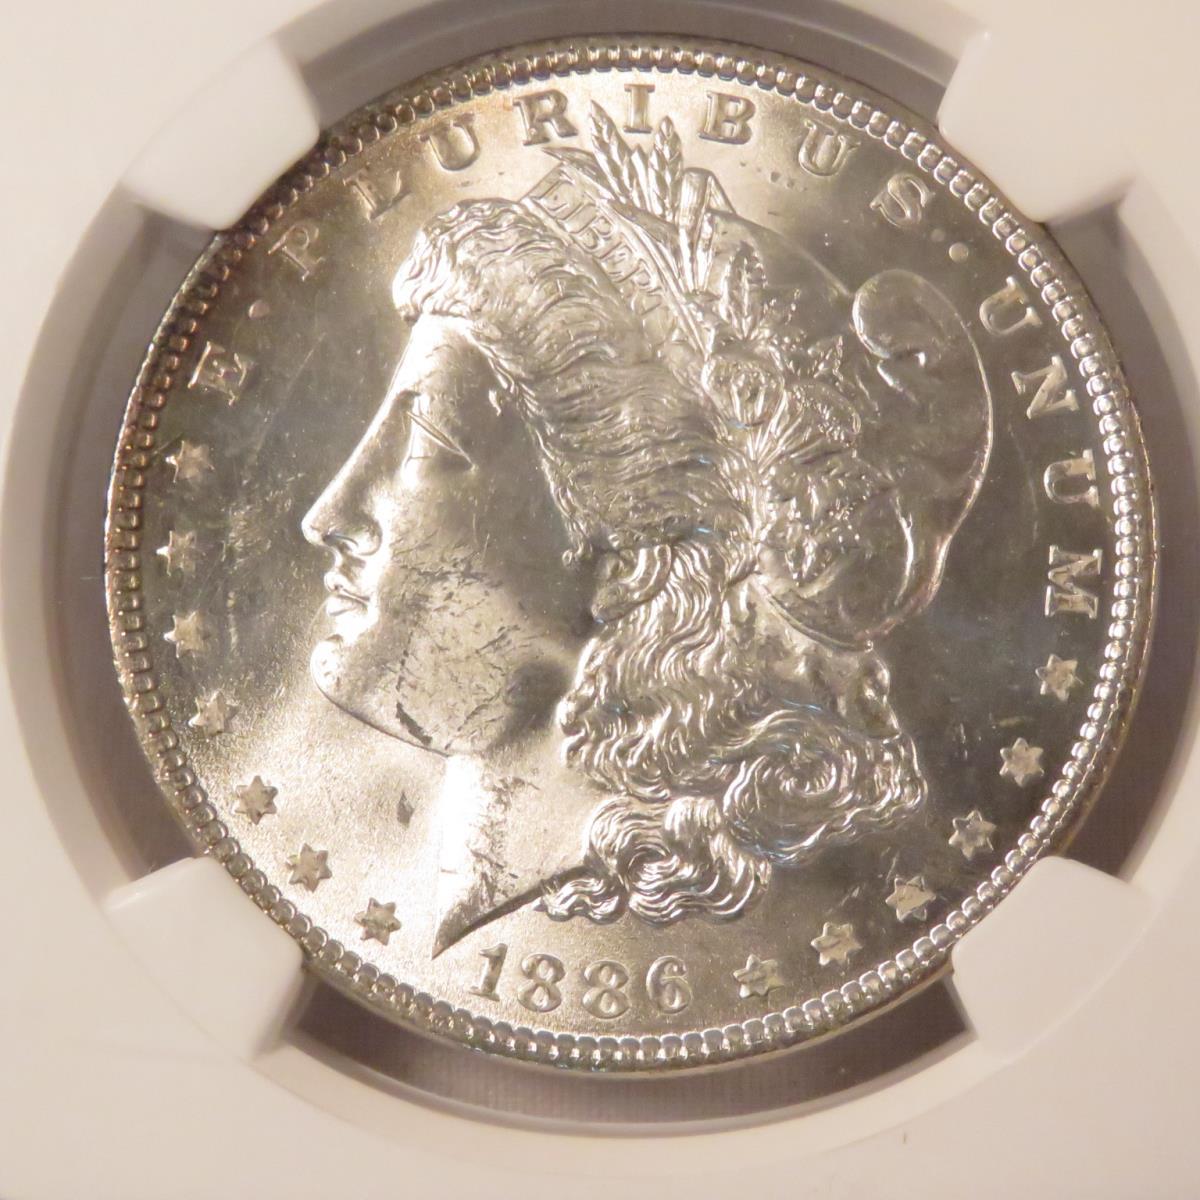 1886 Morgan Silver Dollar NGC Graded MS64